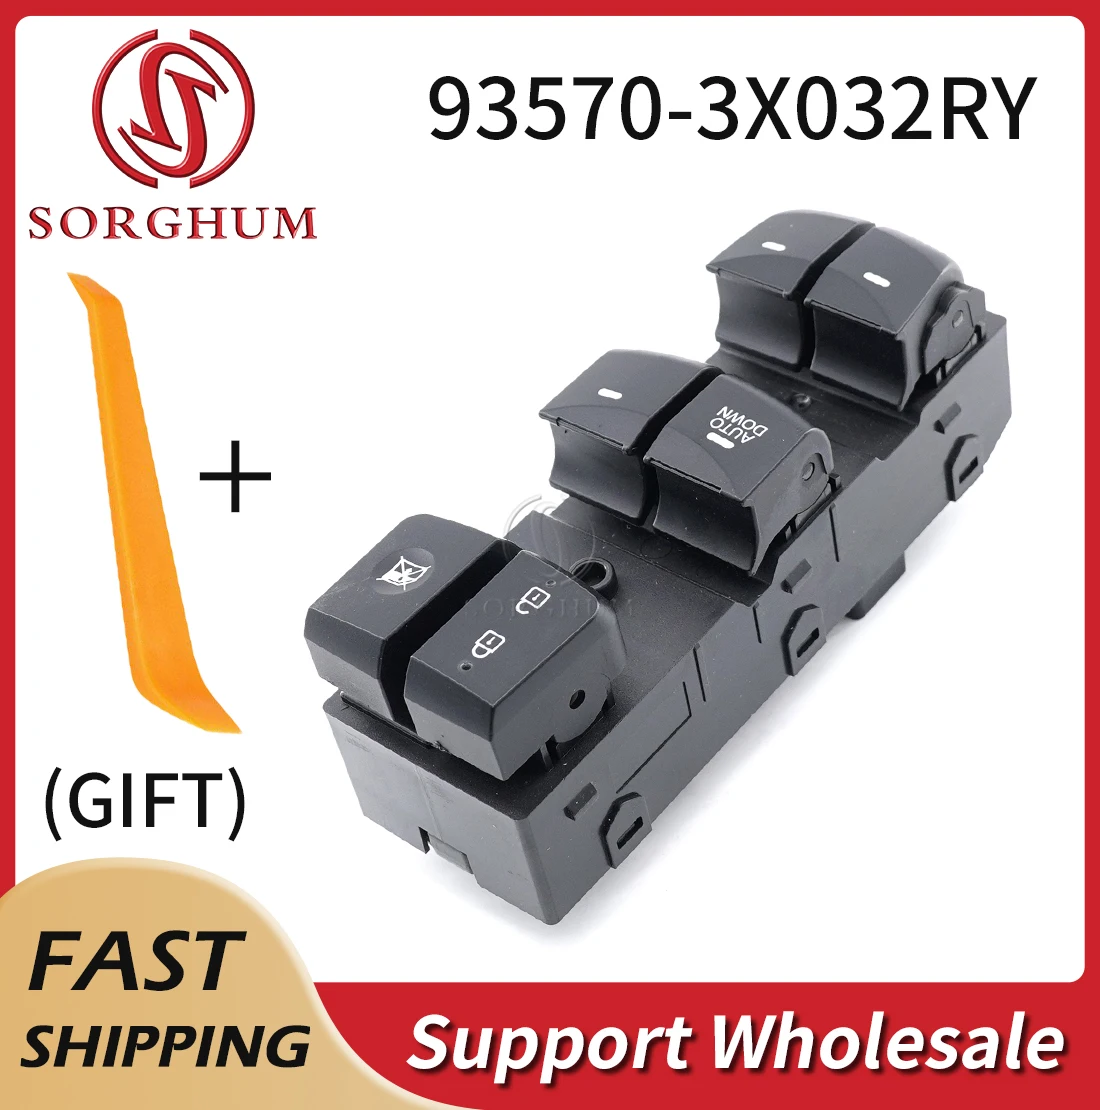 

Sorghum 93570-3X032RY Car Auto Down Left Driver Power Window Switch For Hyundai Elantra Lang 2014-2016 93570-3X030 93570-3X030RY